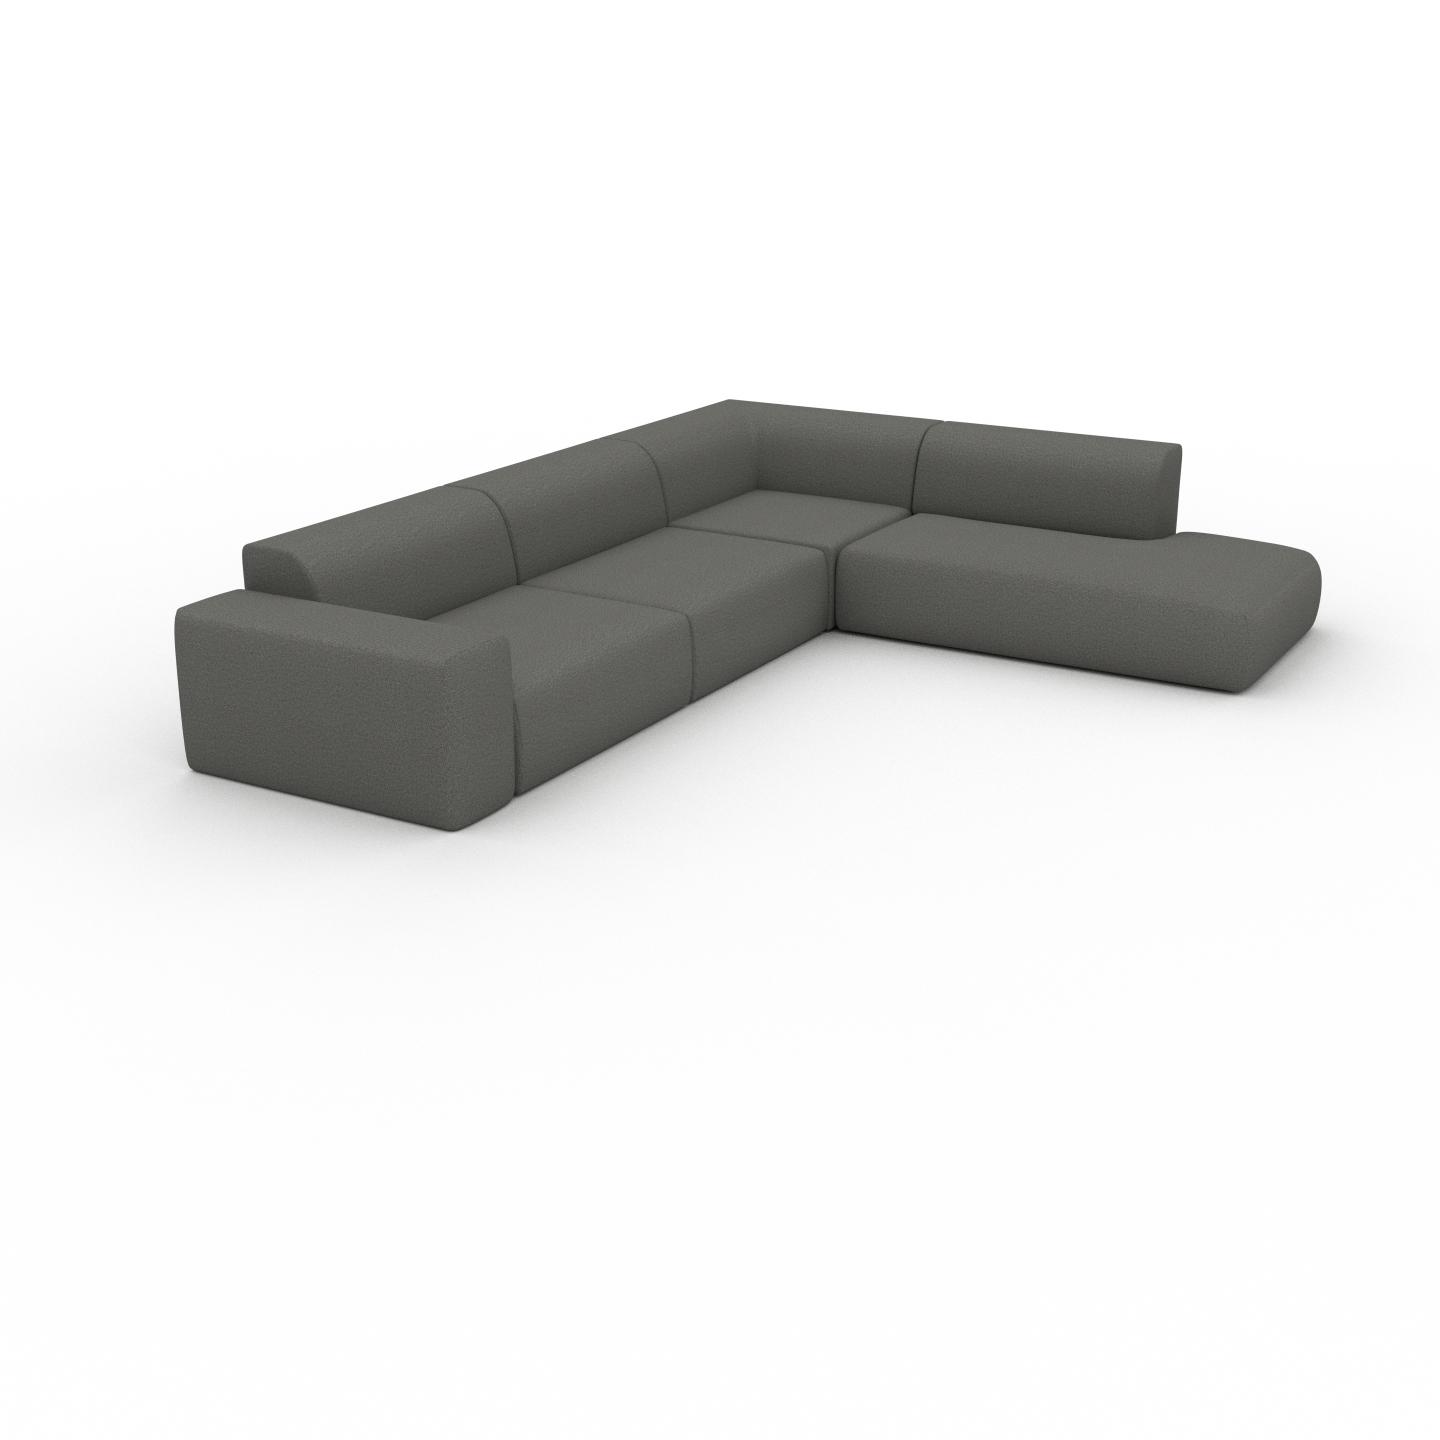 MYCS Ecksofa Kiesgrau - Flexible Designer-Polsterecke, L-Form: Beste Qualität, einzigartiges Design - 267 x 72 x 339 cm, konfigurierbar